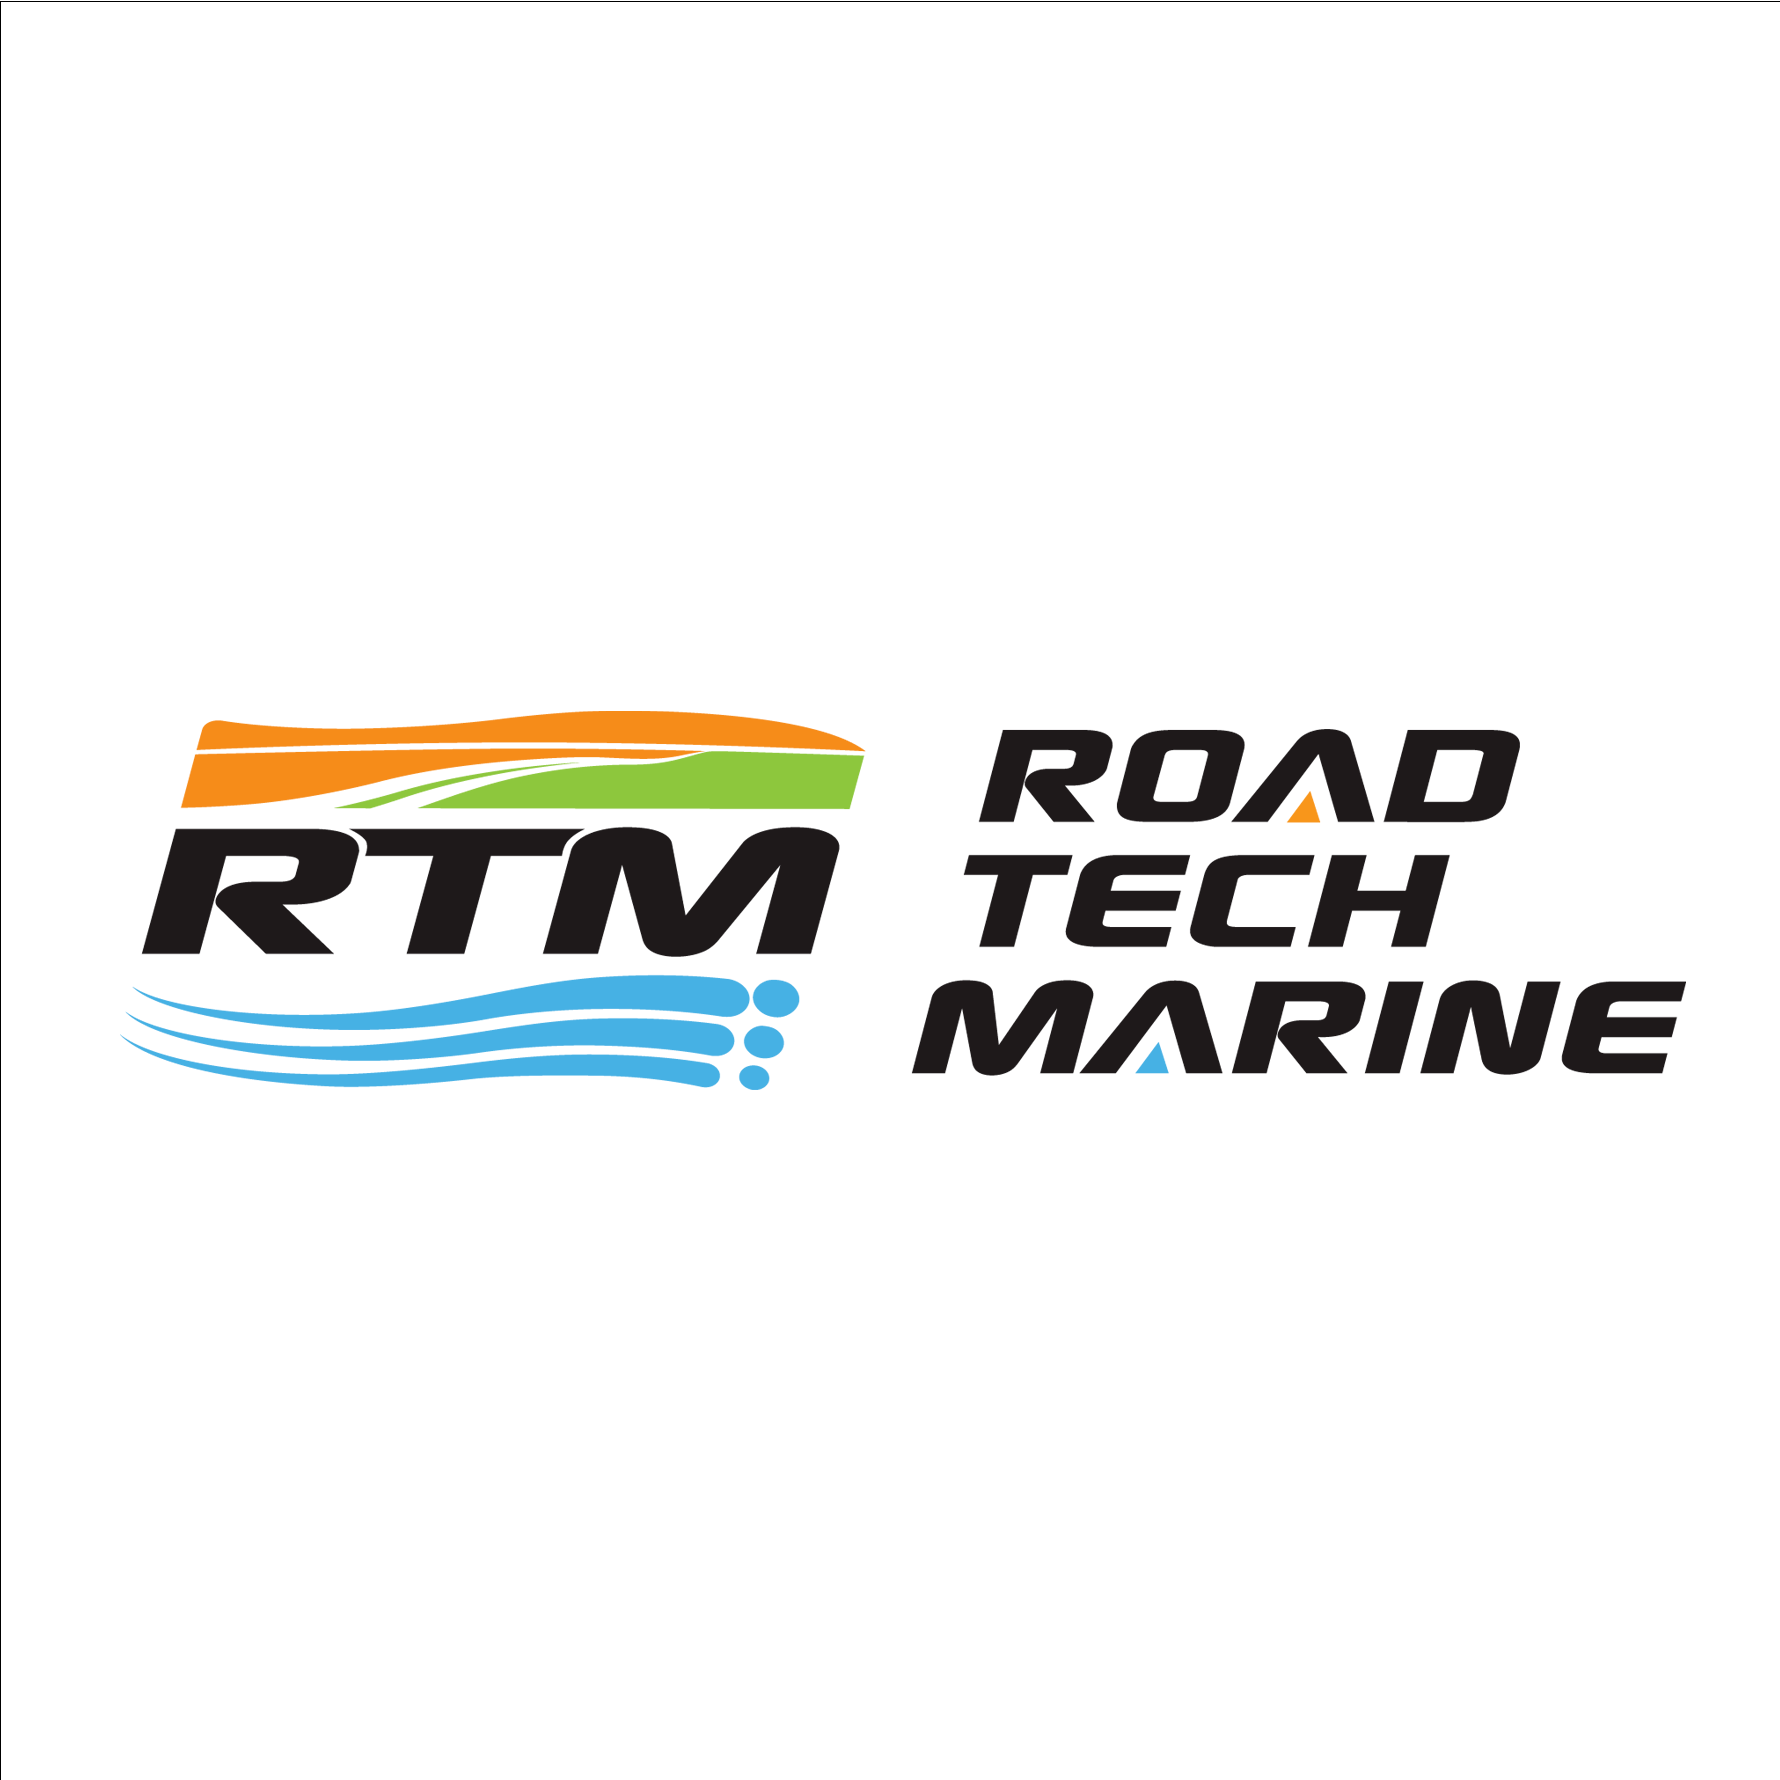 RTM - Road Tech Marine North Lakes North Lakes (07) 3448 6395